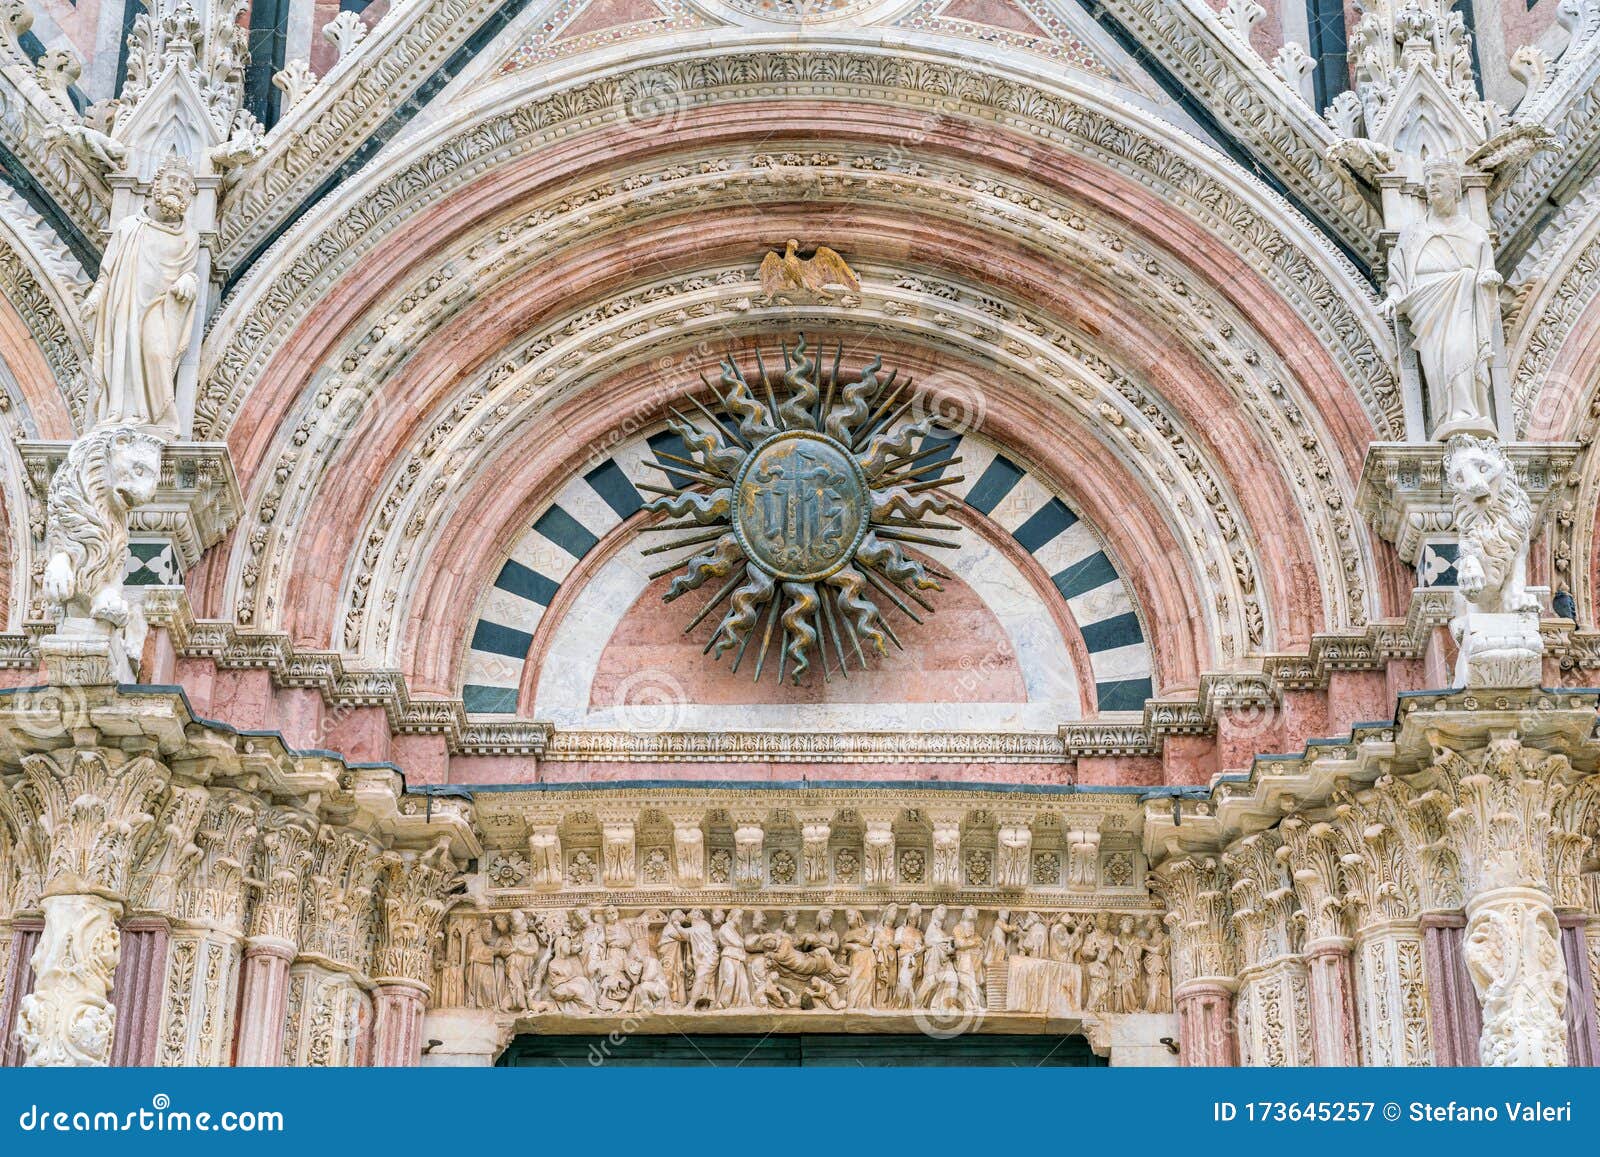 detail from the main facade of the duomo of siena, tuscany, italy.